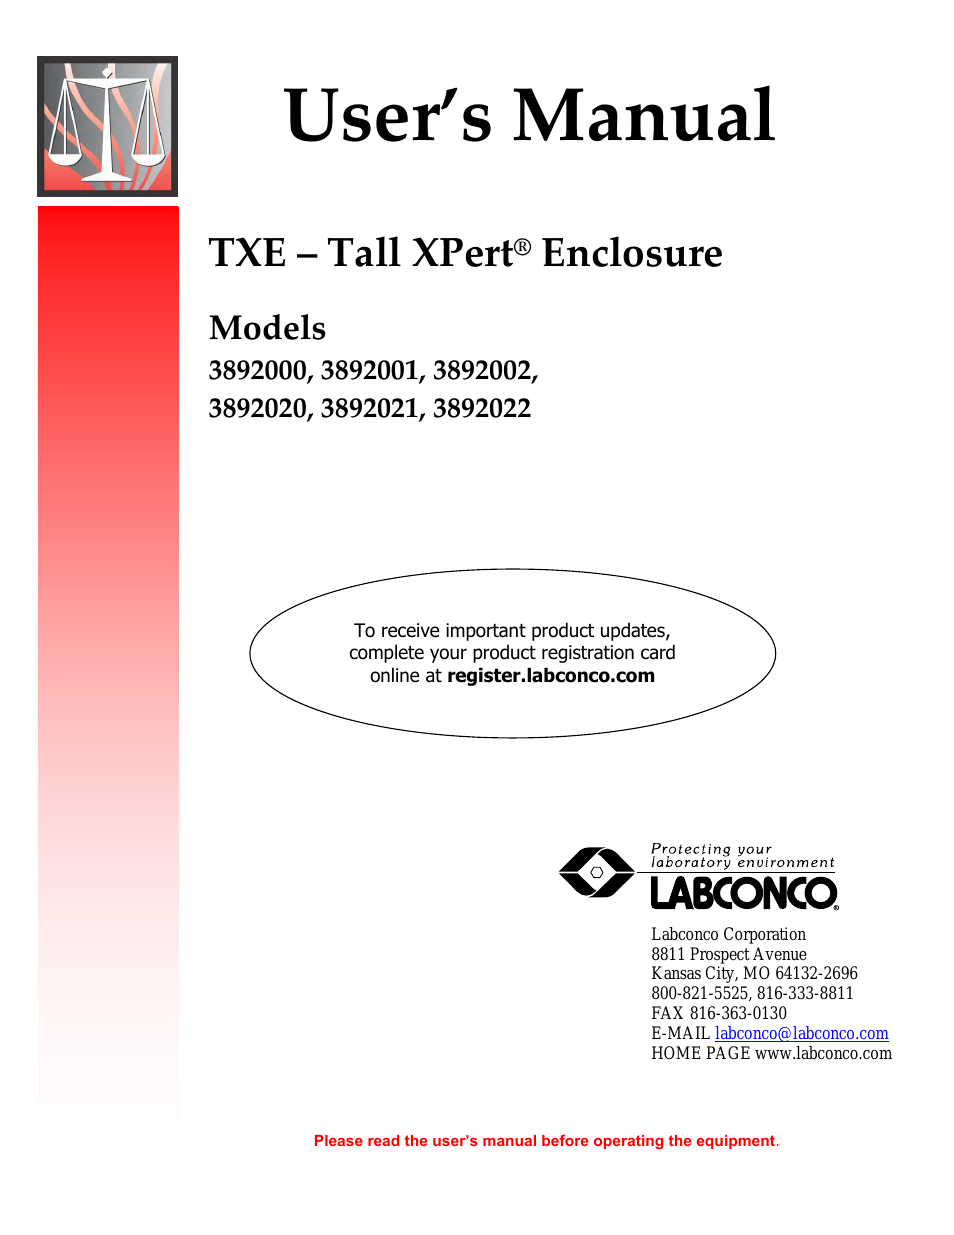 TXE Tall XPerEnclosure 3892002